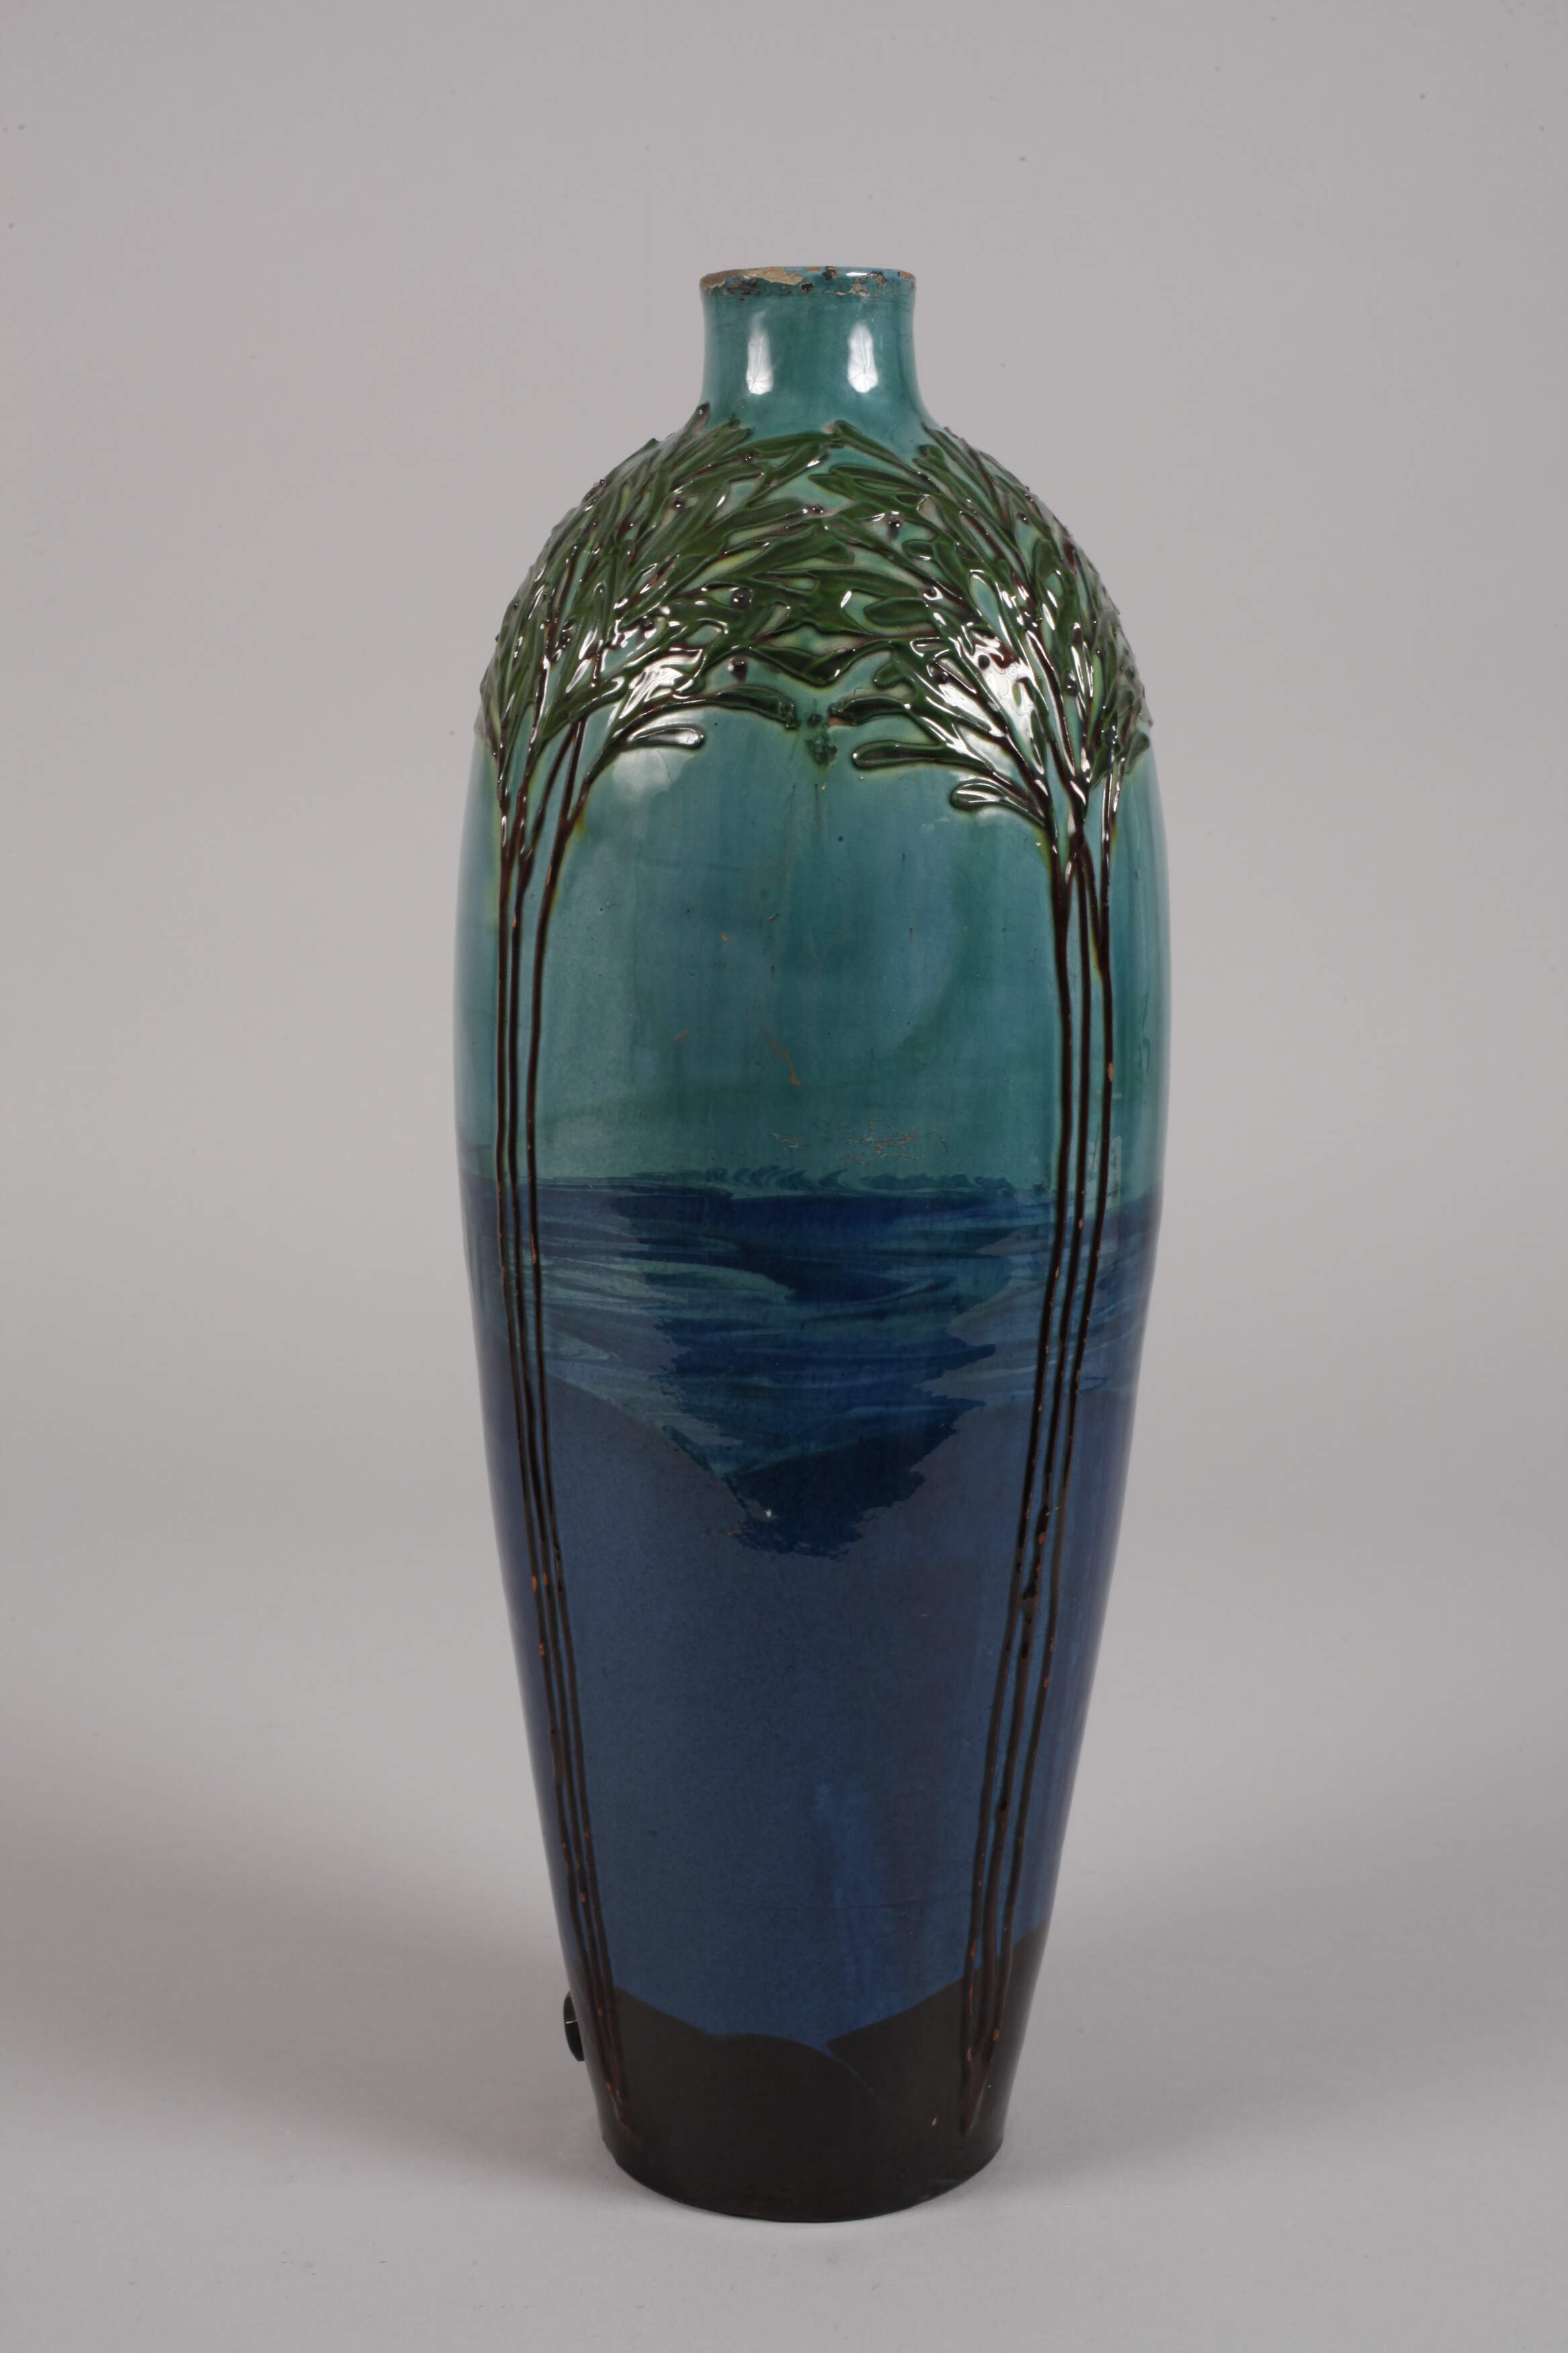 Max Laeuger large vase as lamp base - Image 2 of 5